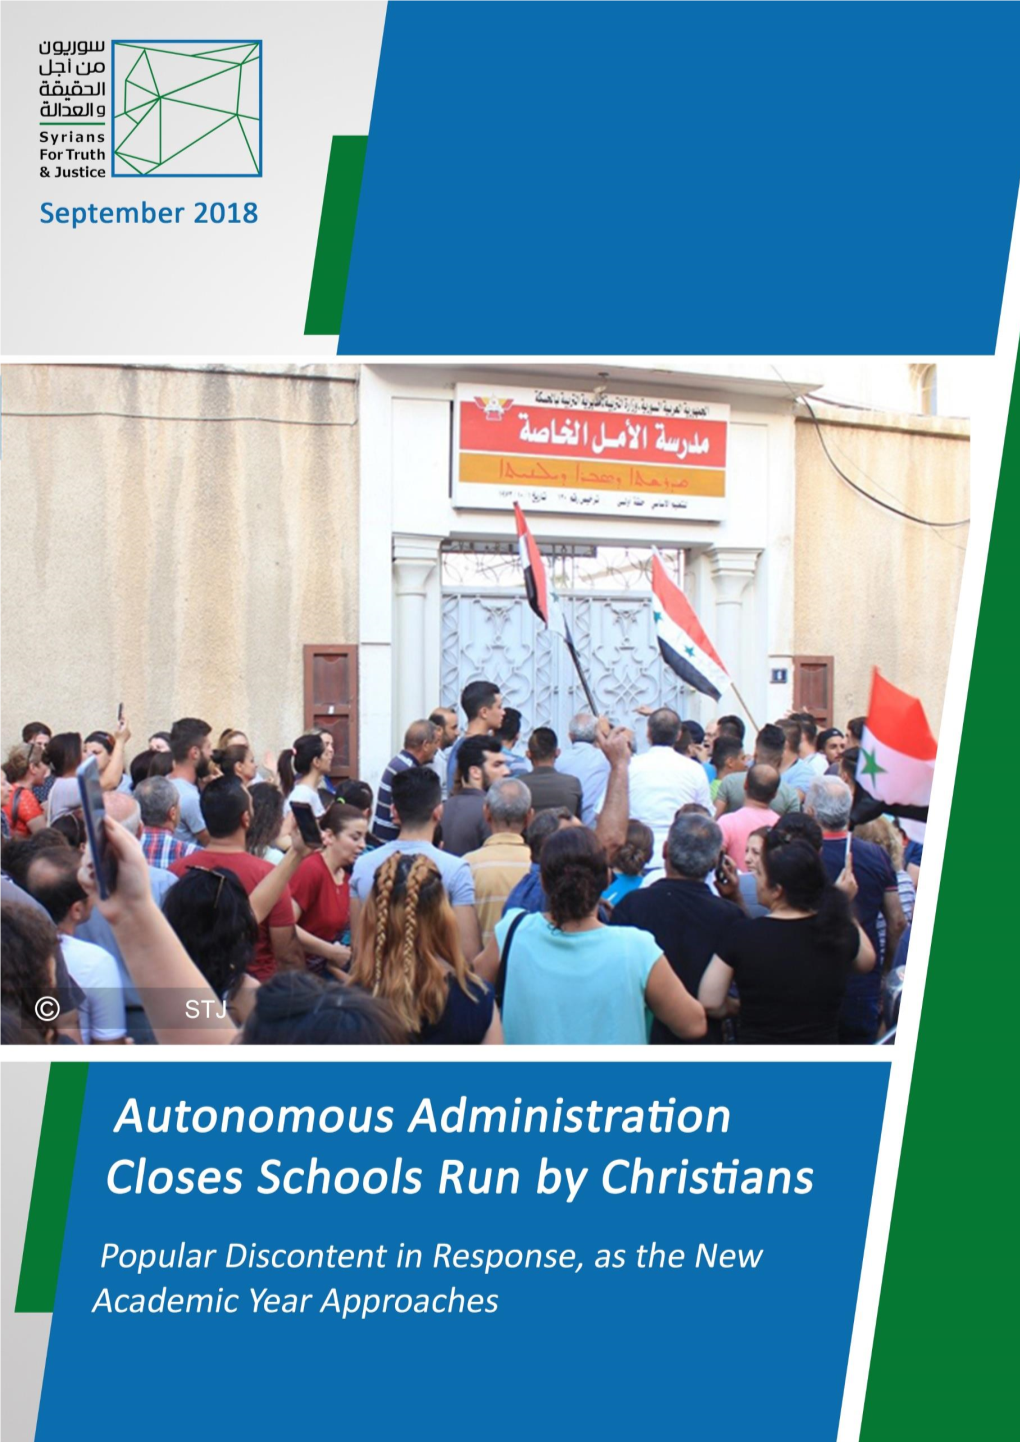 I. Autonomous Administration Closes Syriac and Armenian Private Schools